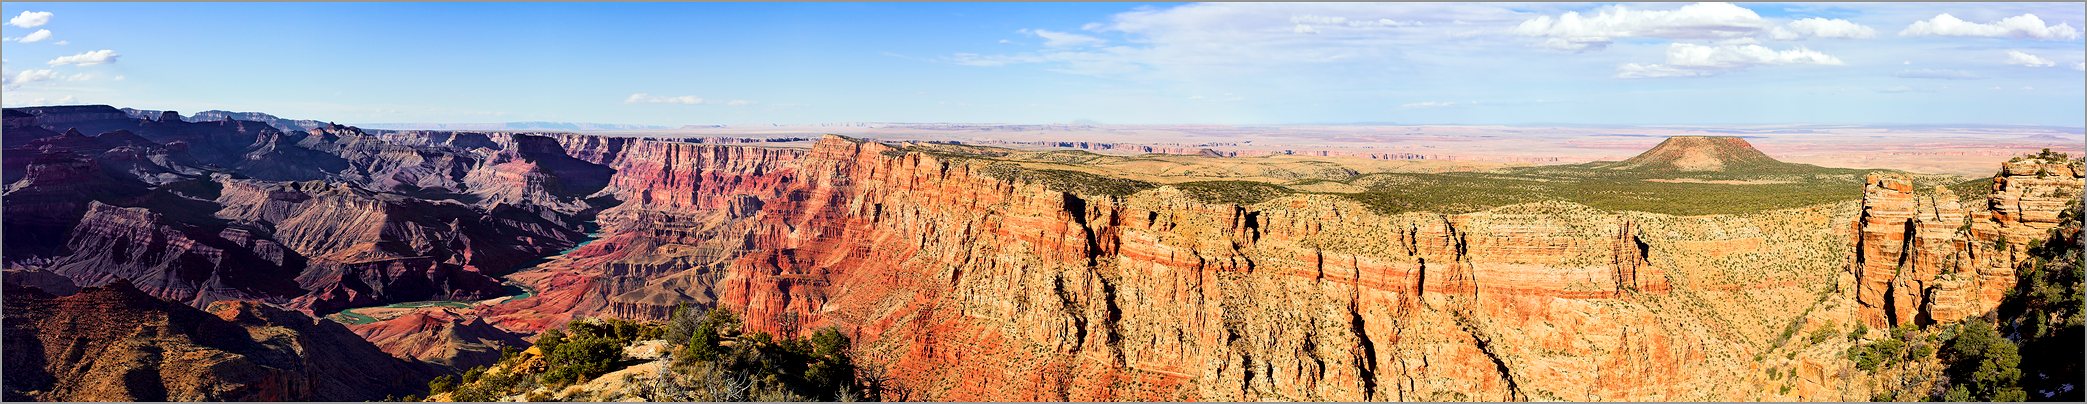 Grand Canyon National Park - Desert view Point en vue panoramique ...